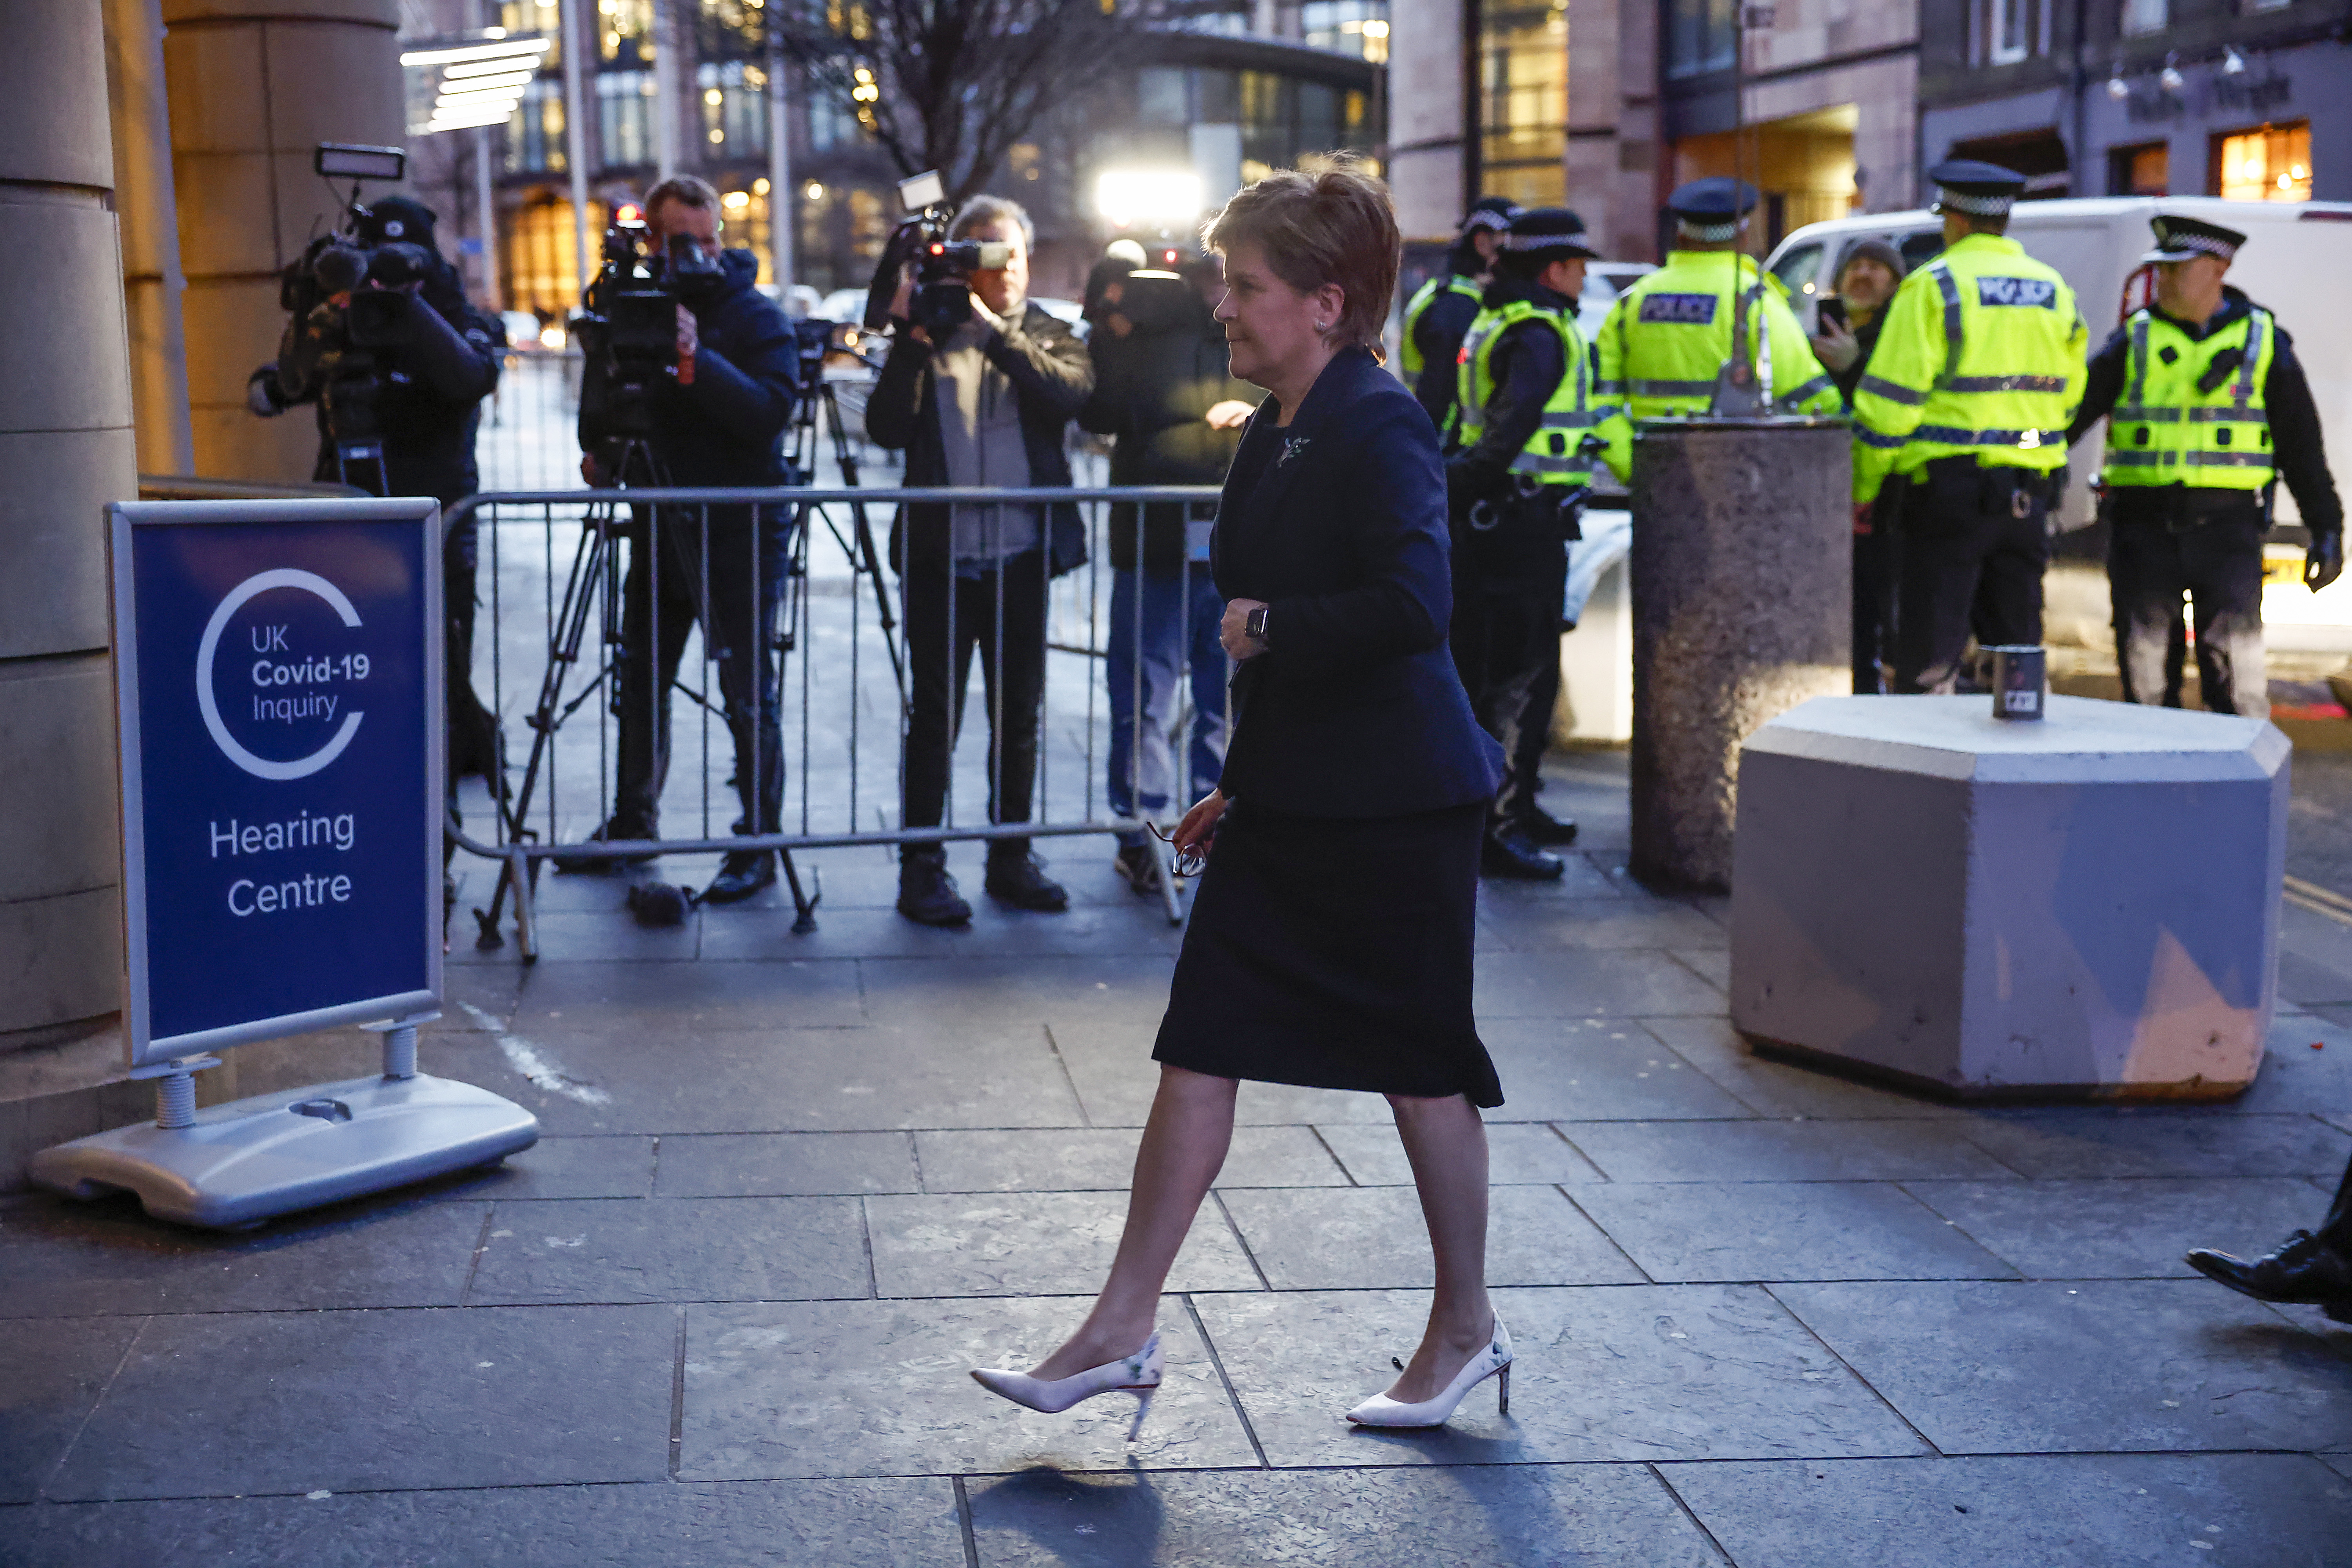 Nicola Sturgeon arriving at the UK Covid Inquiry in Edinburgh.